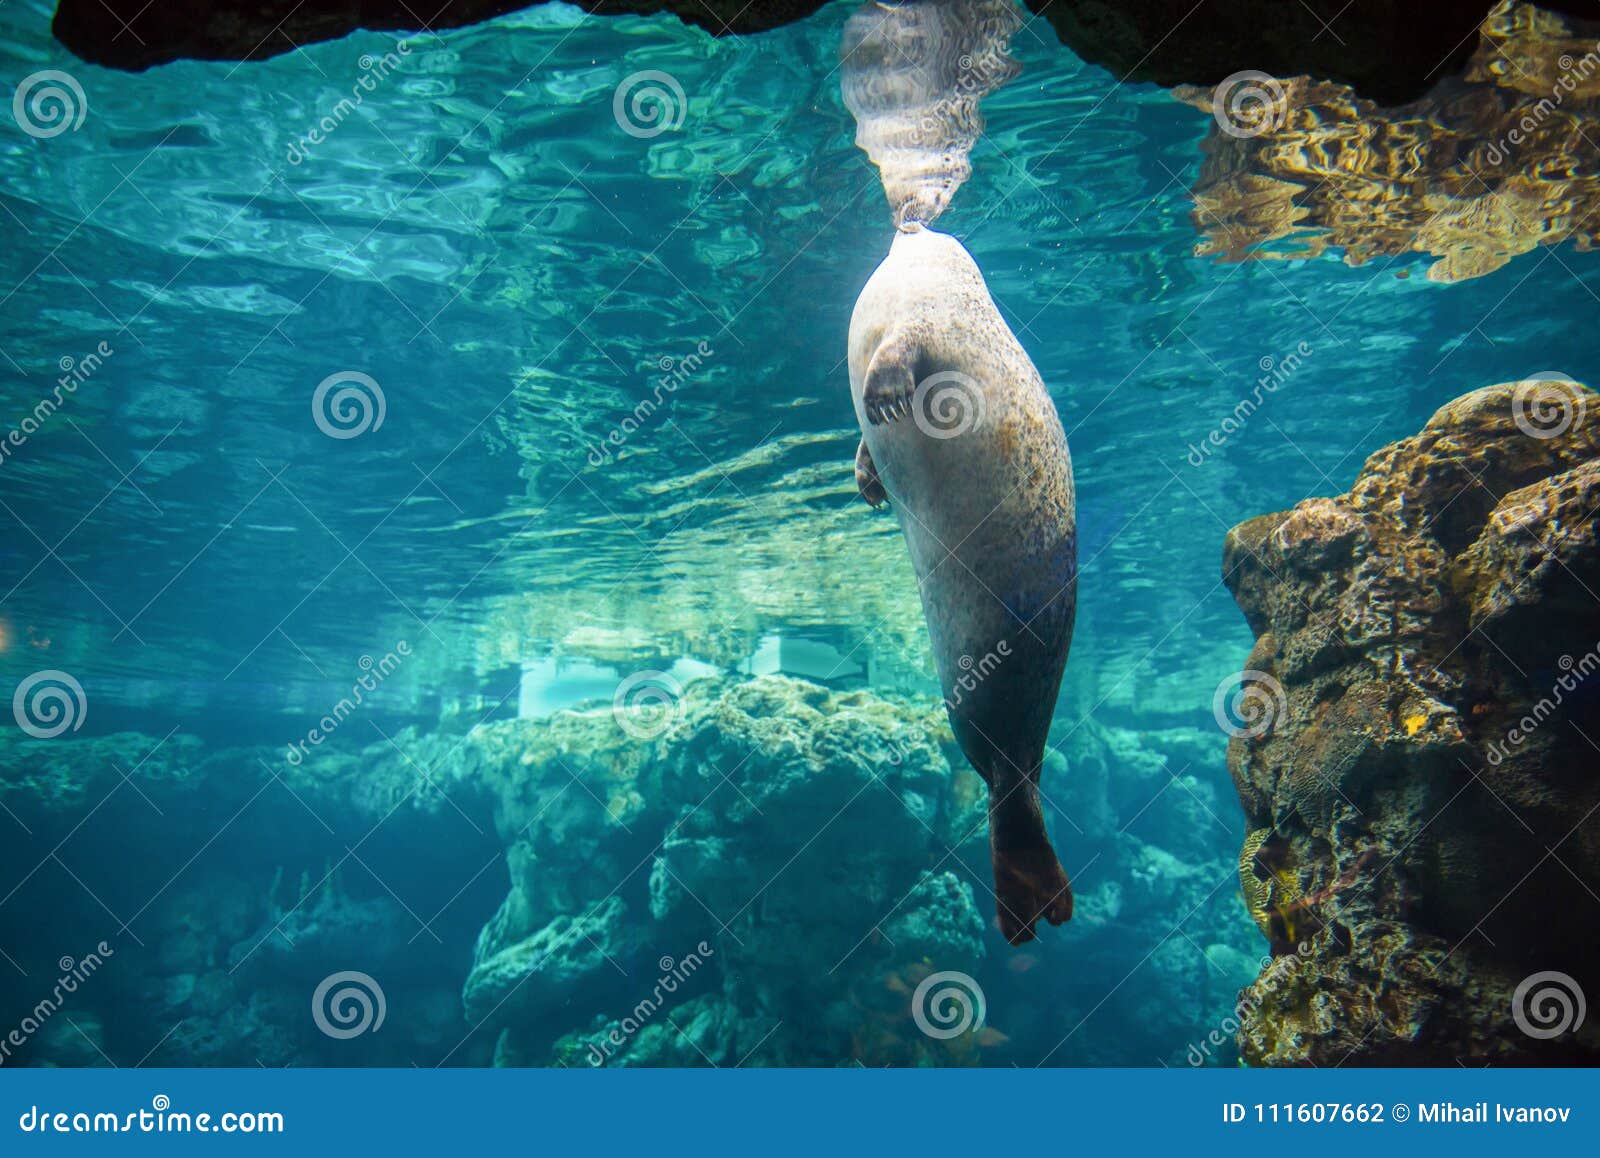 harbor seal, phoca vitulina